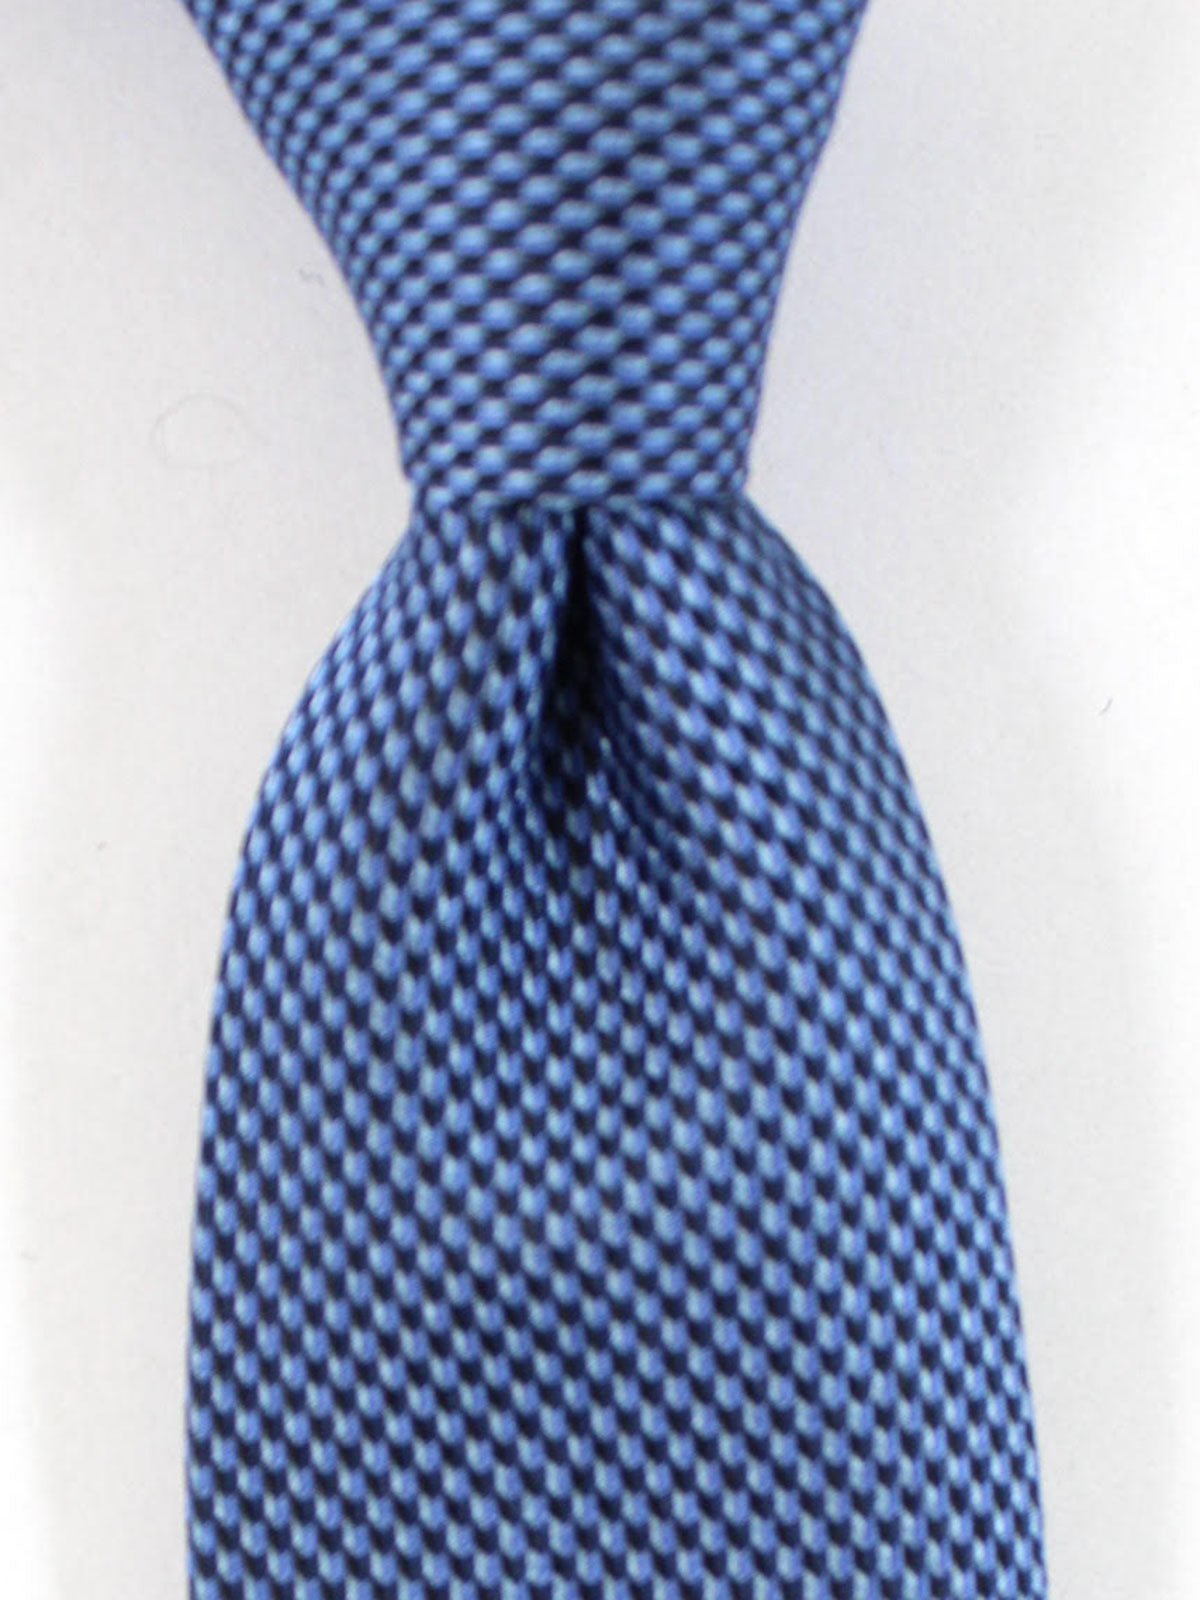 Salvatore Ferragamo Tie Navy Gray Blue Knitted Square End Tie Final Sale